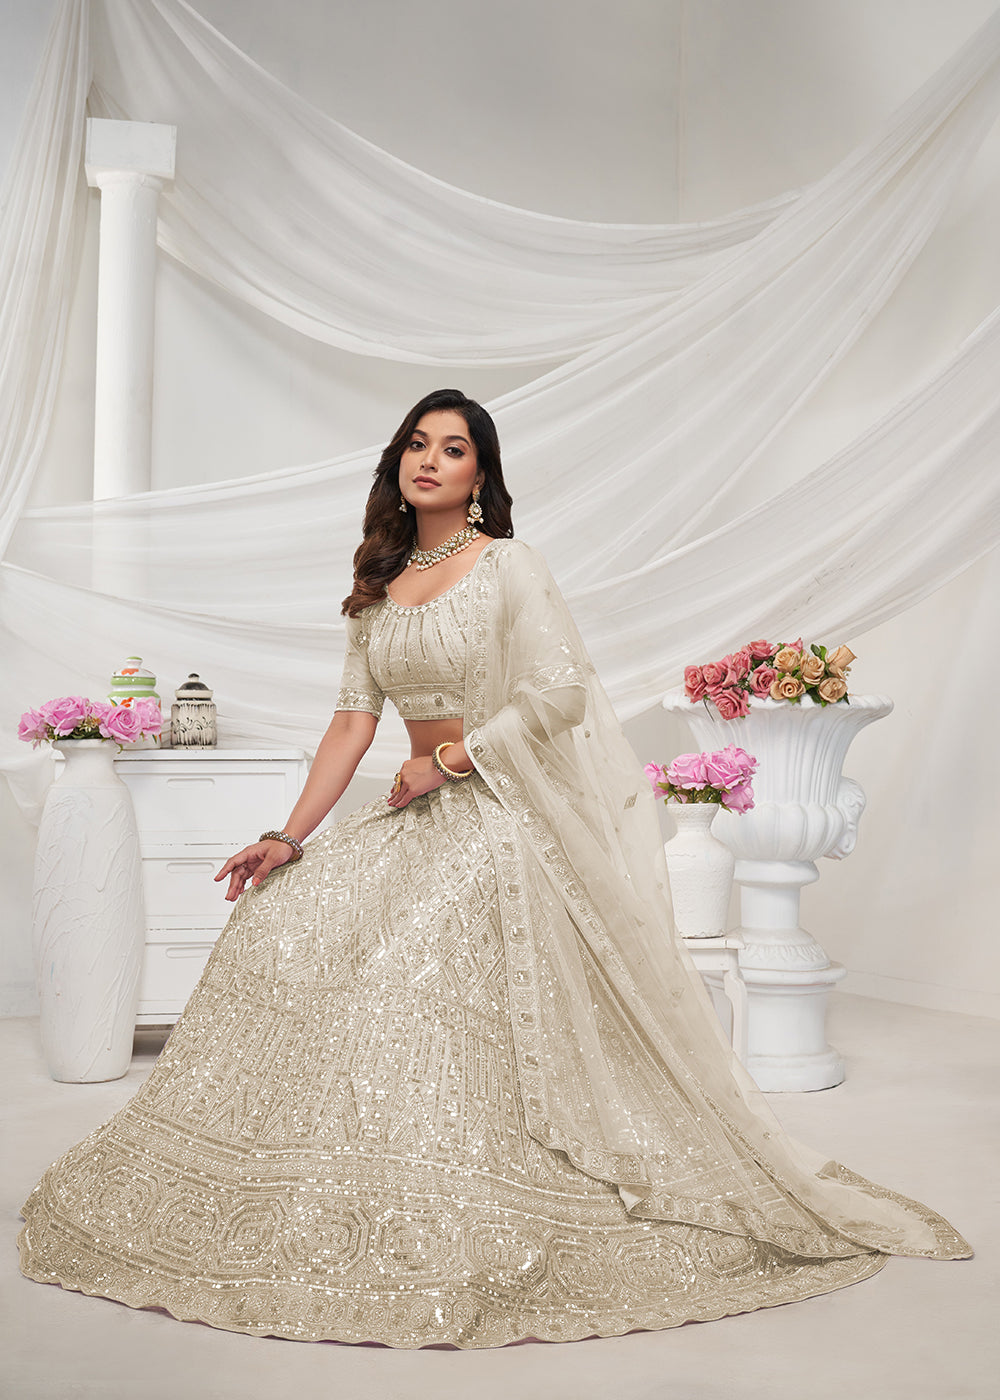 Buy Now Pearled Ivory White Heavy Embroidered Bridal Lehenga Choli Online in USA, UK, Canada & Worldwide at Empress Clothing. 